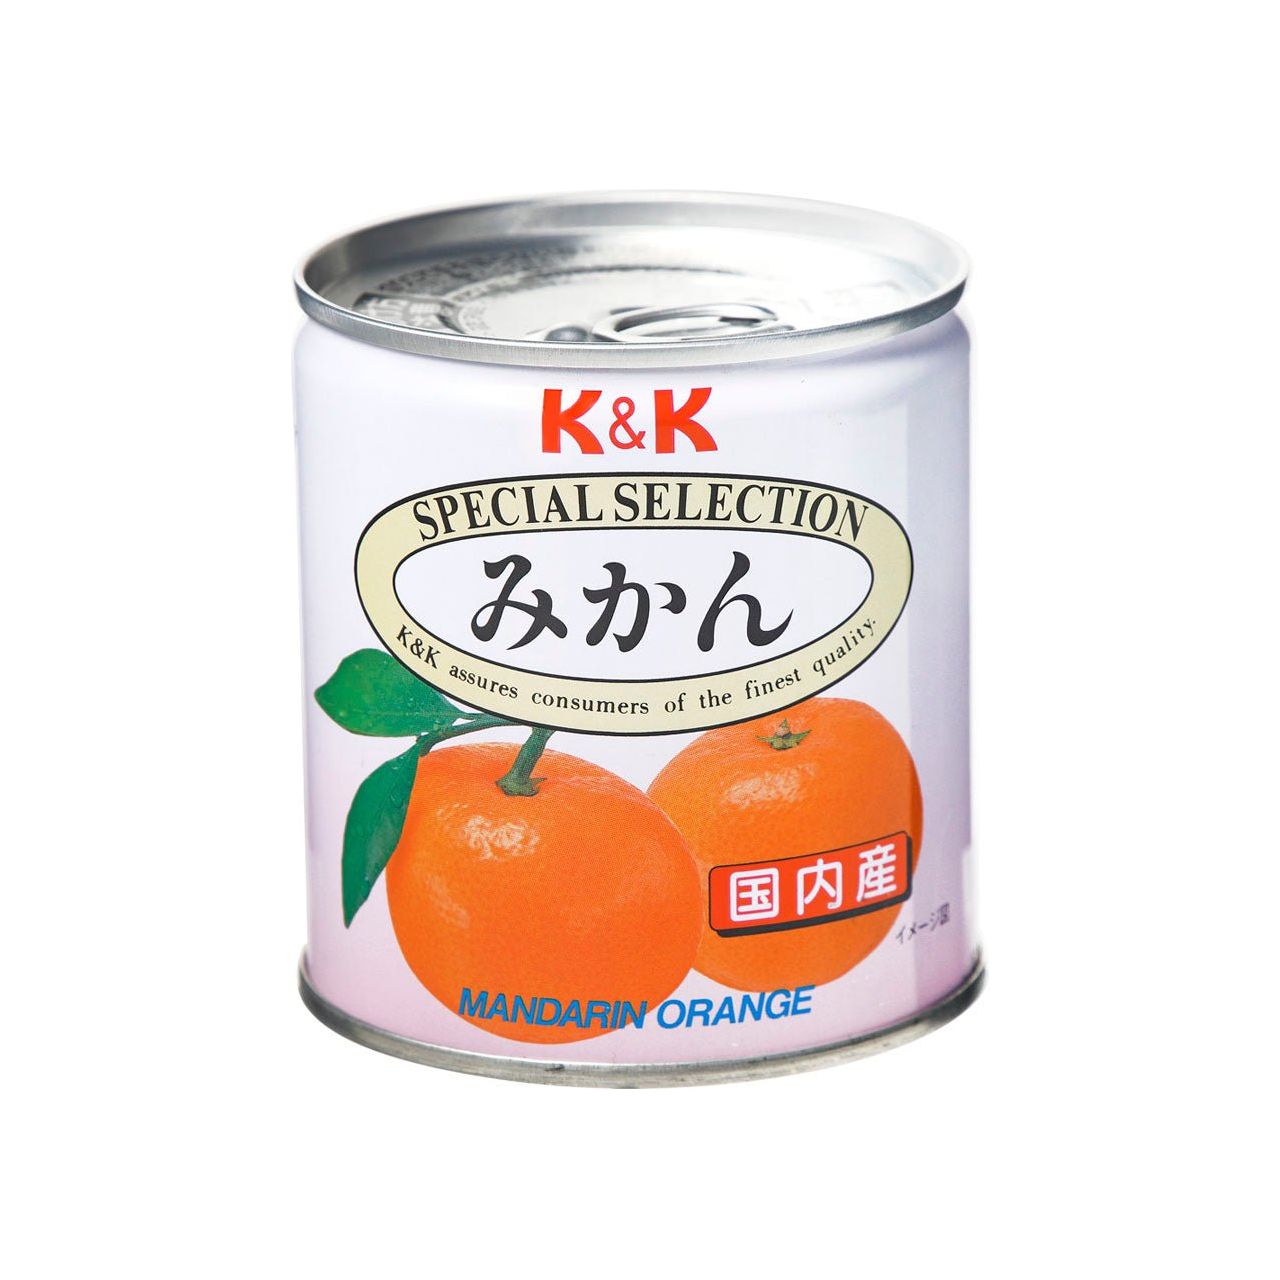 Naranjas de mandarín de K&K (pequeñas)